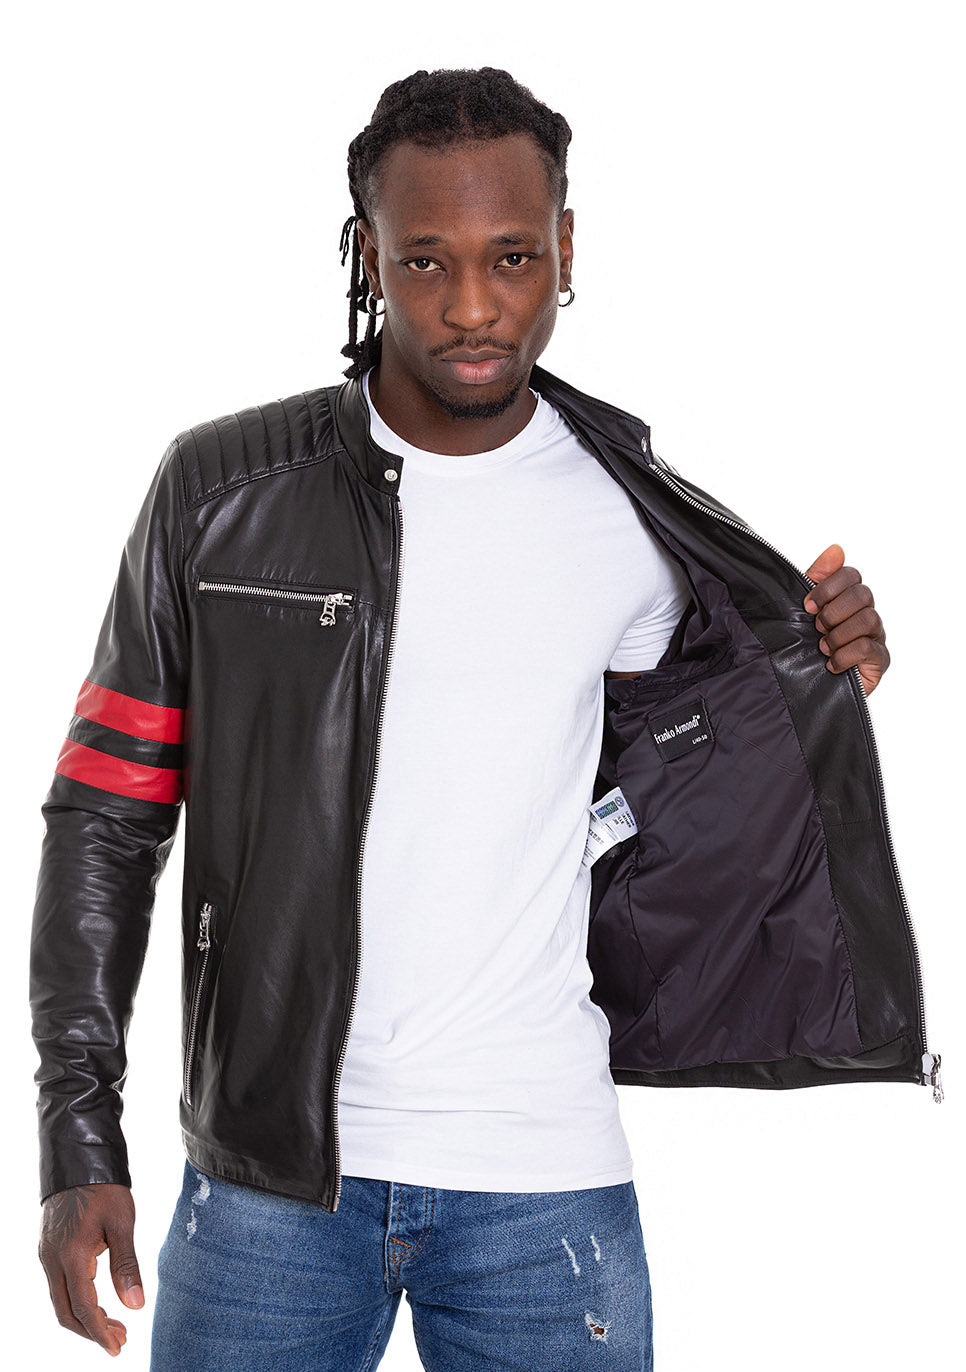 The Urban Black Leather Men Jacket